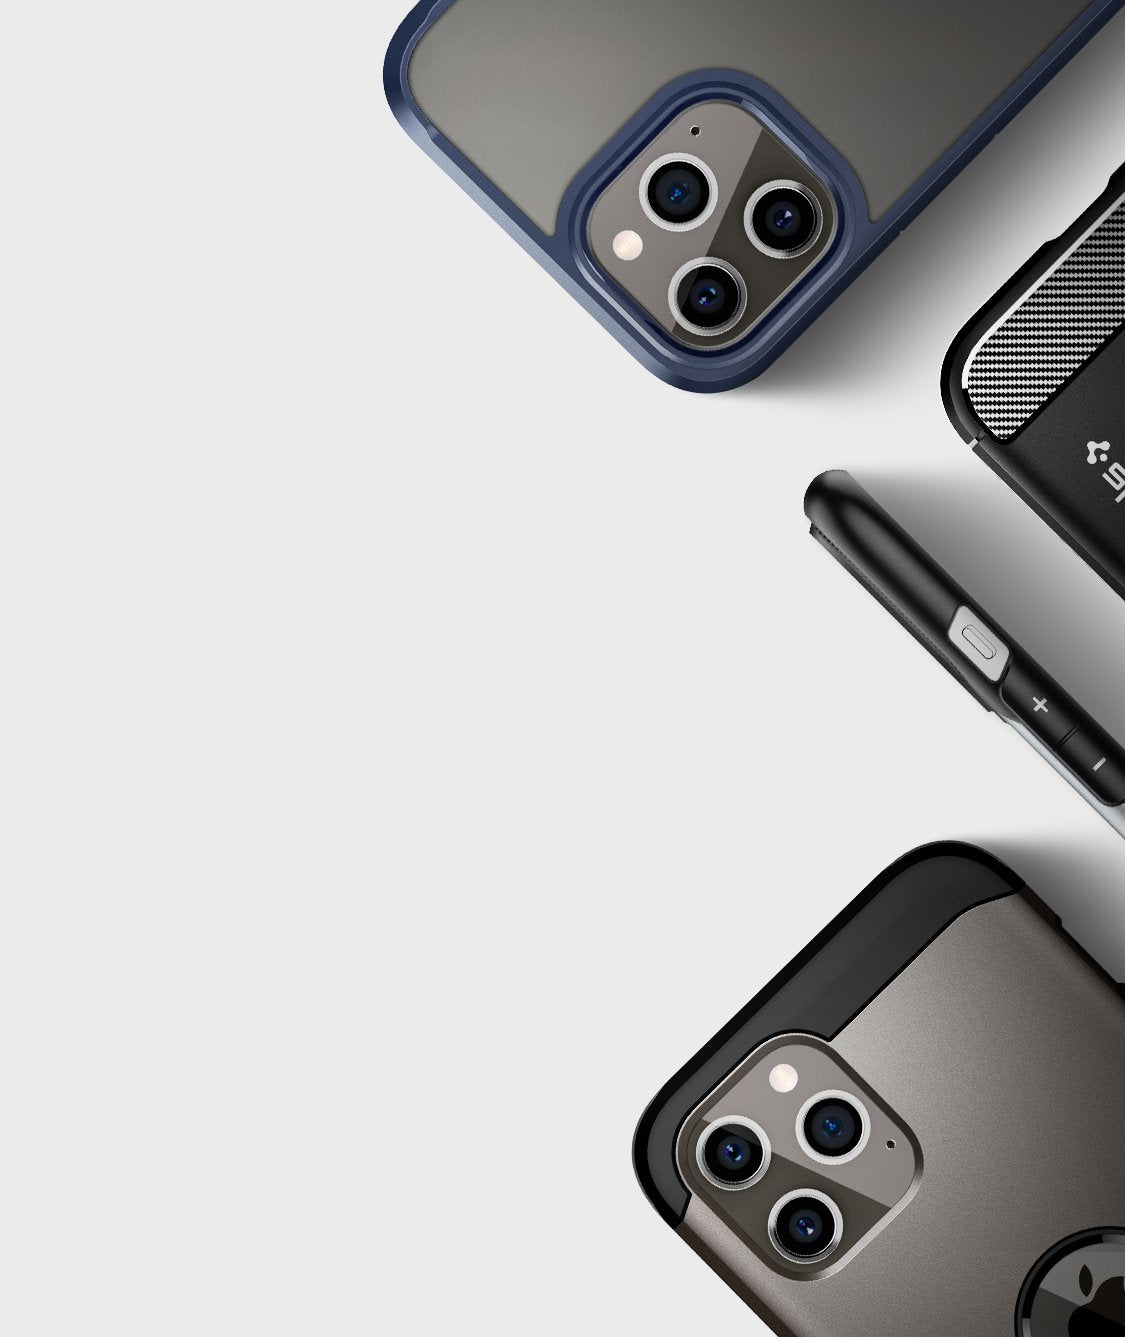 Spigen iPhone 12 Pro Max cases - Spigen Cases And Accessories - Keep In  Case Store